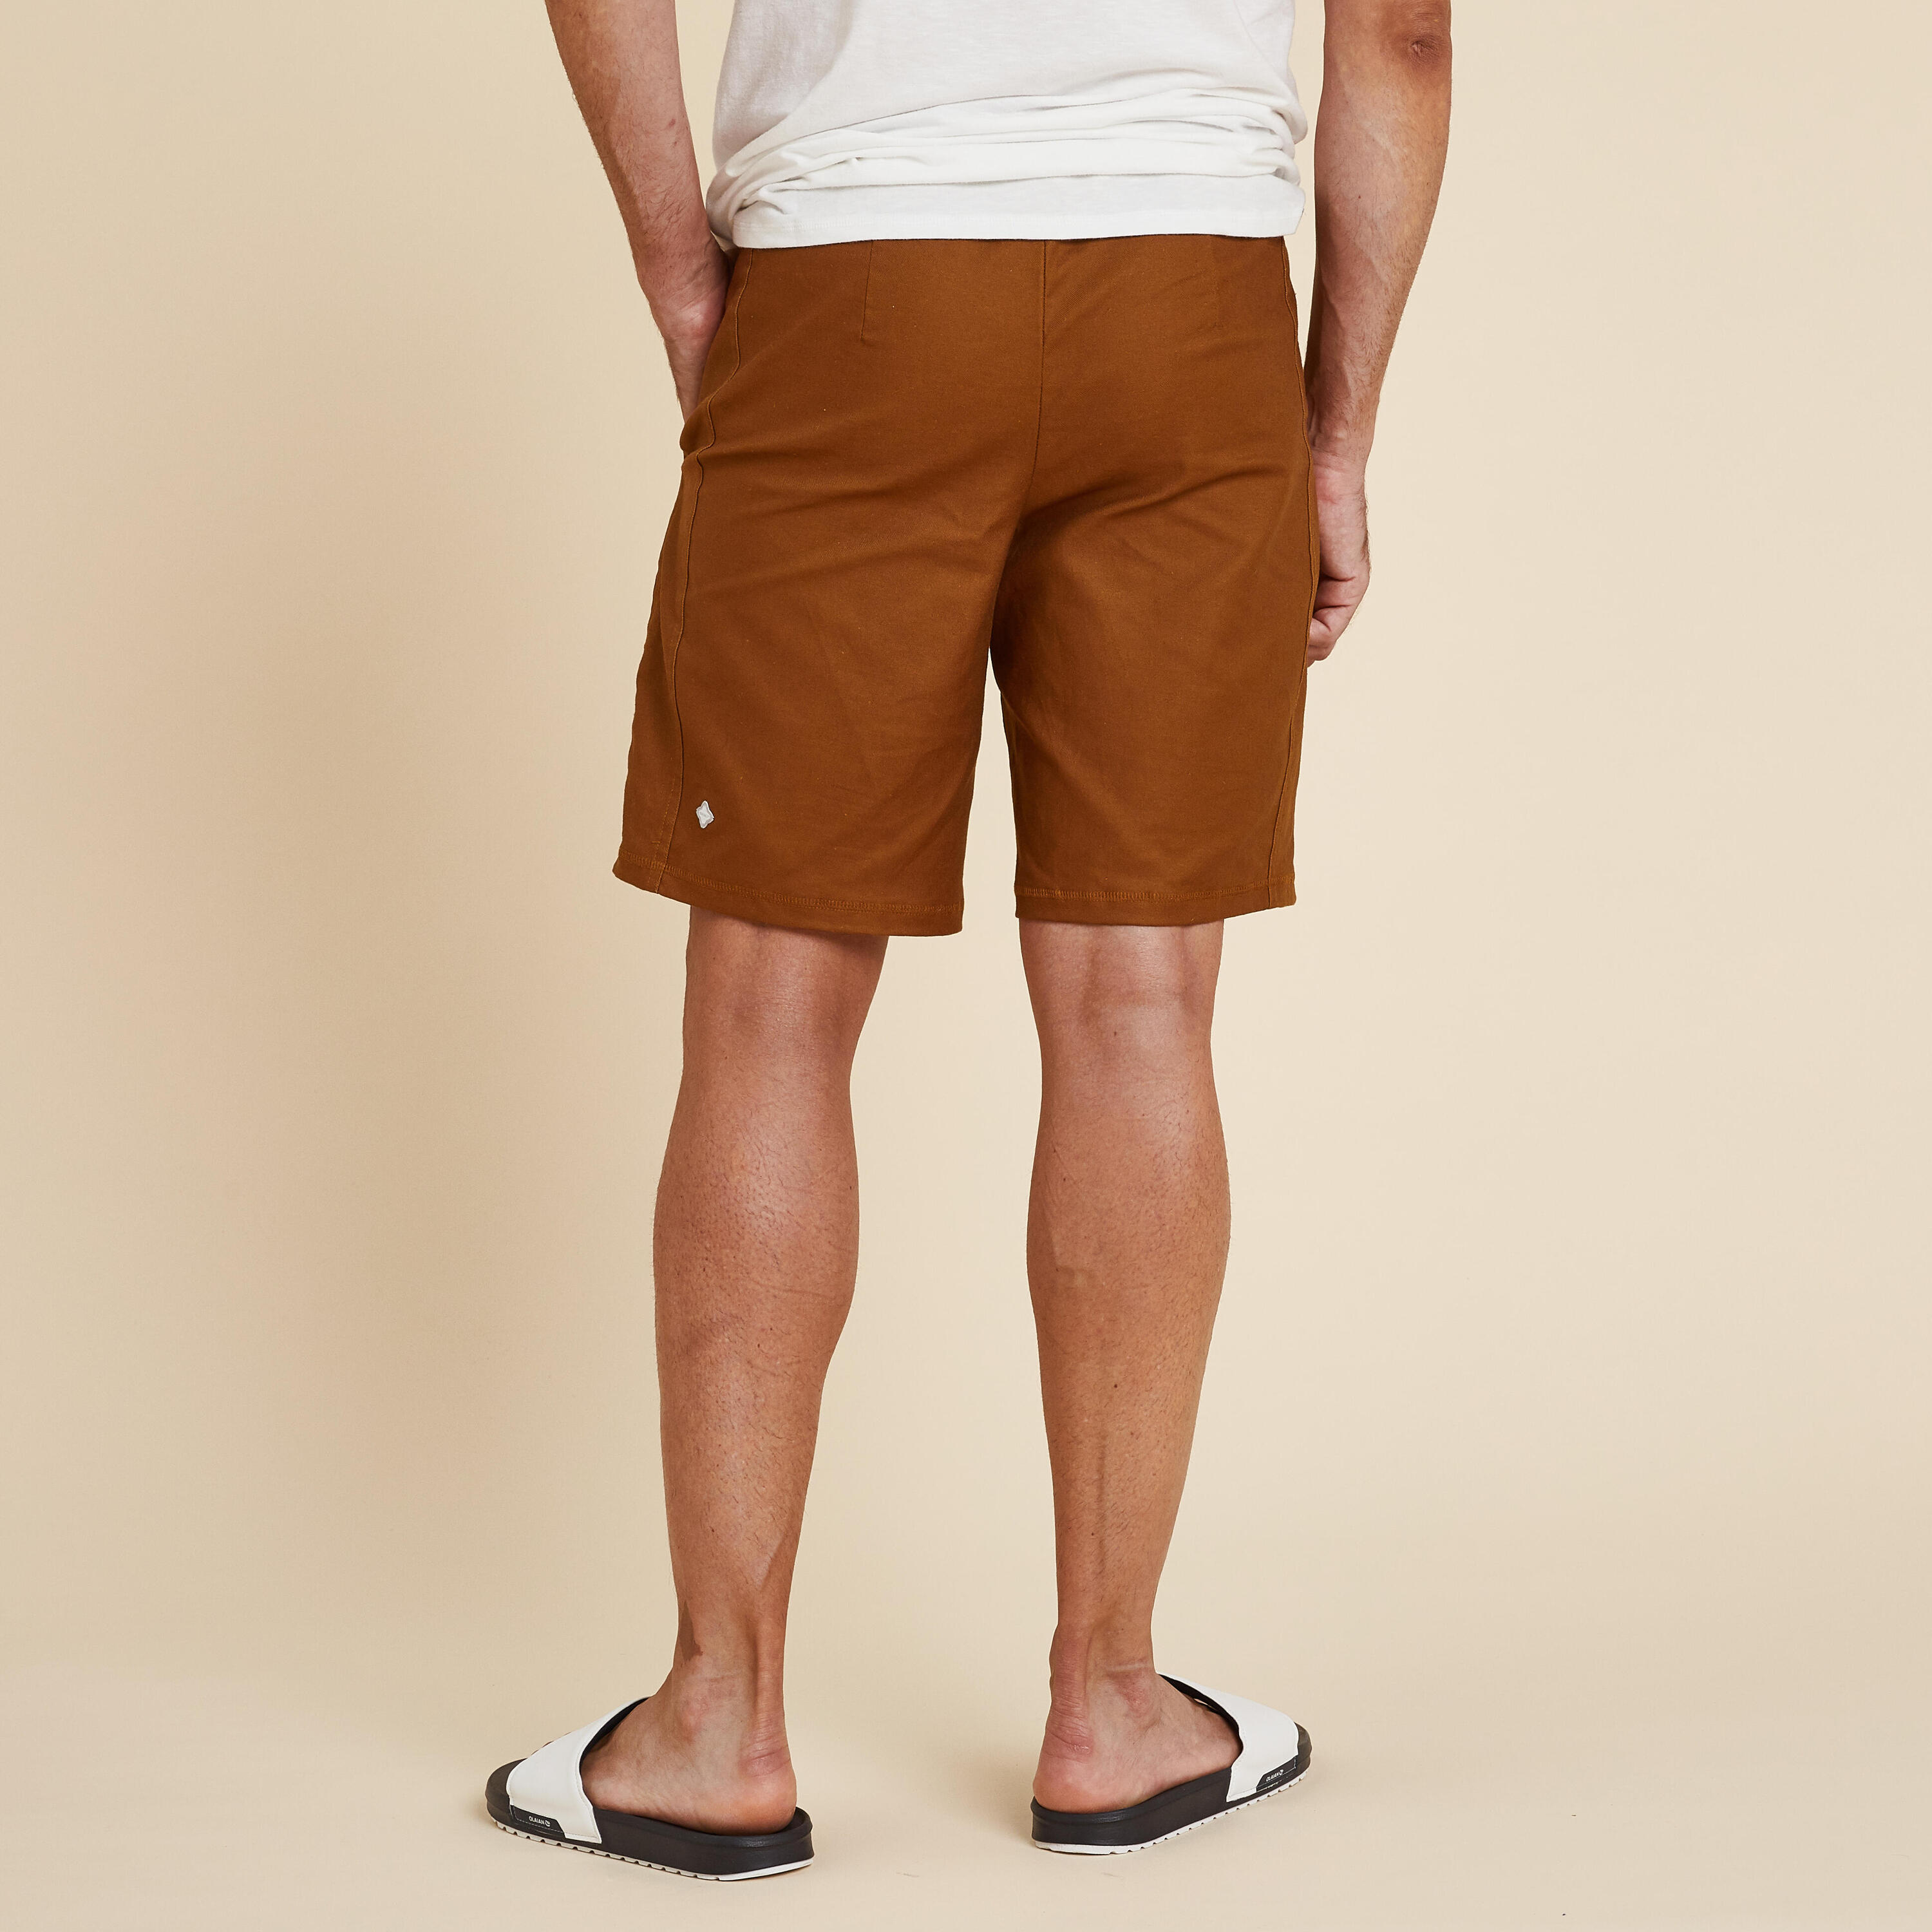 Men's Yoga Linen and Cotton Shorts - Brown 4/6